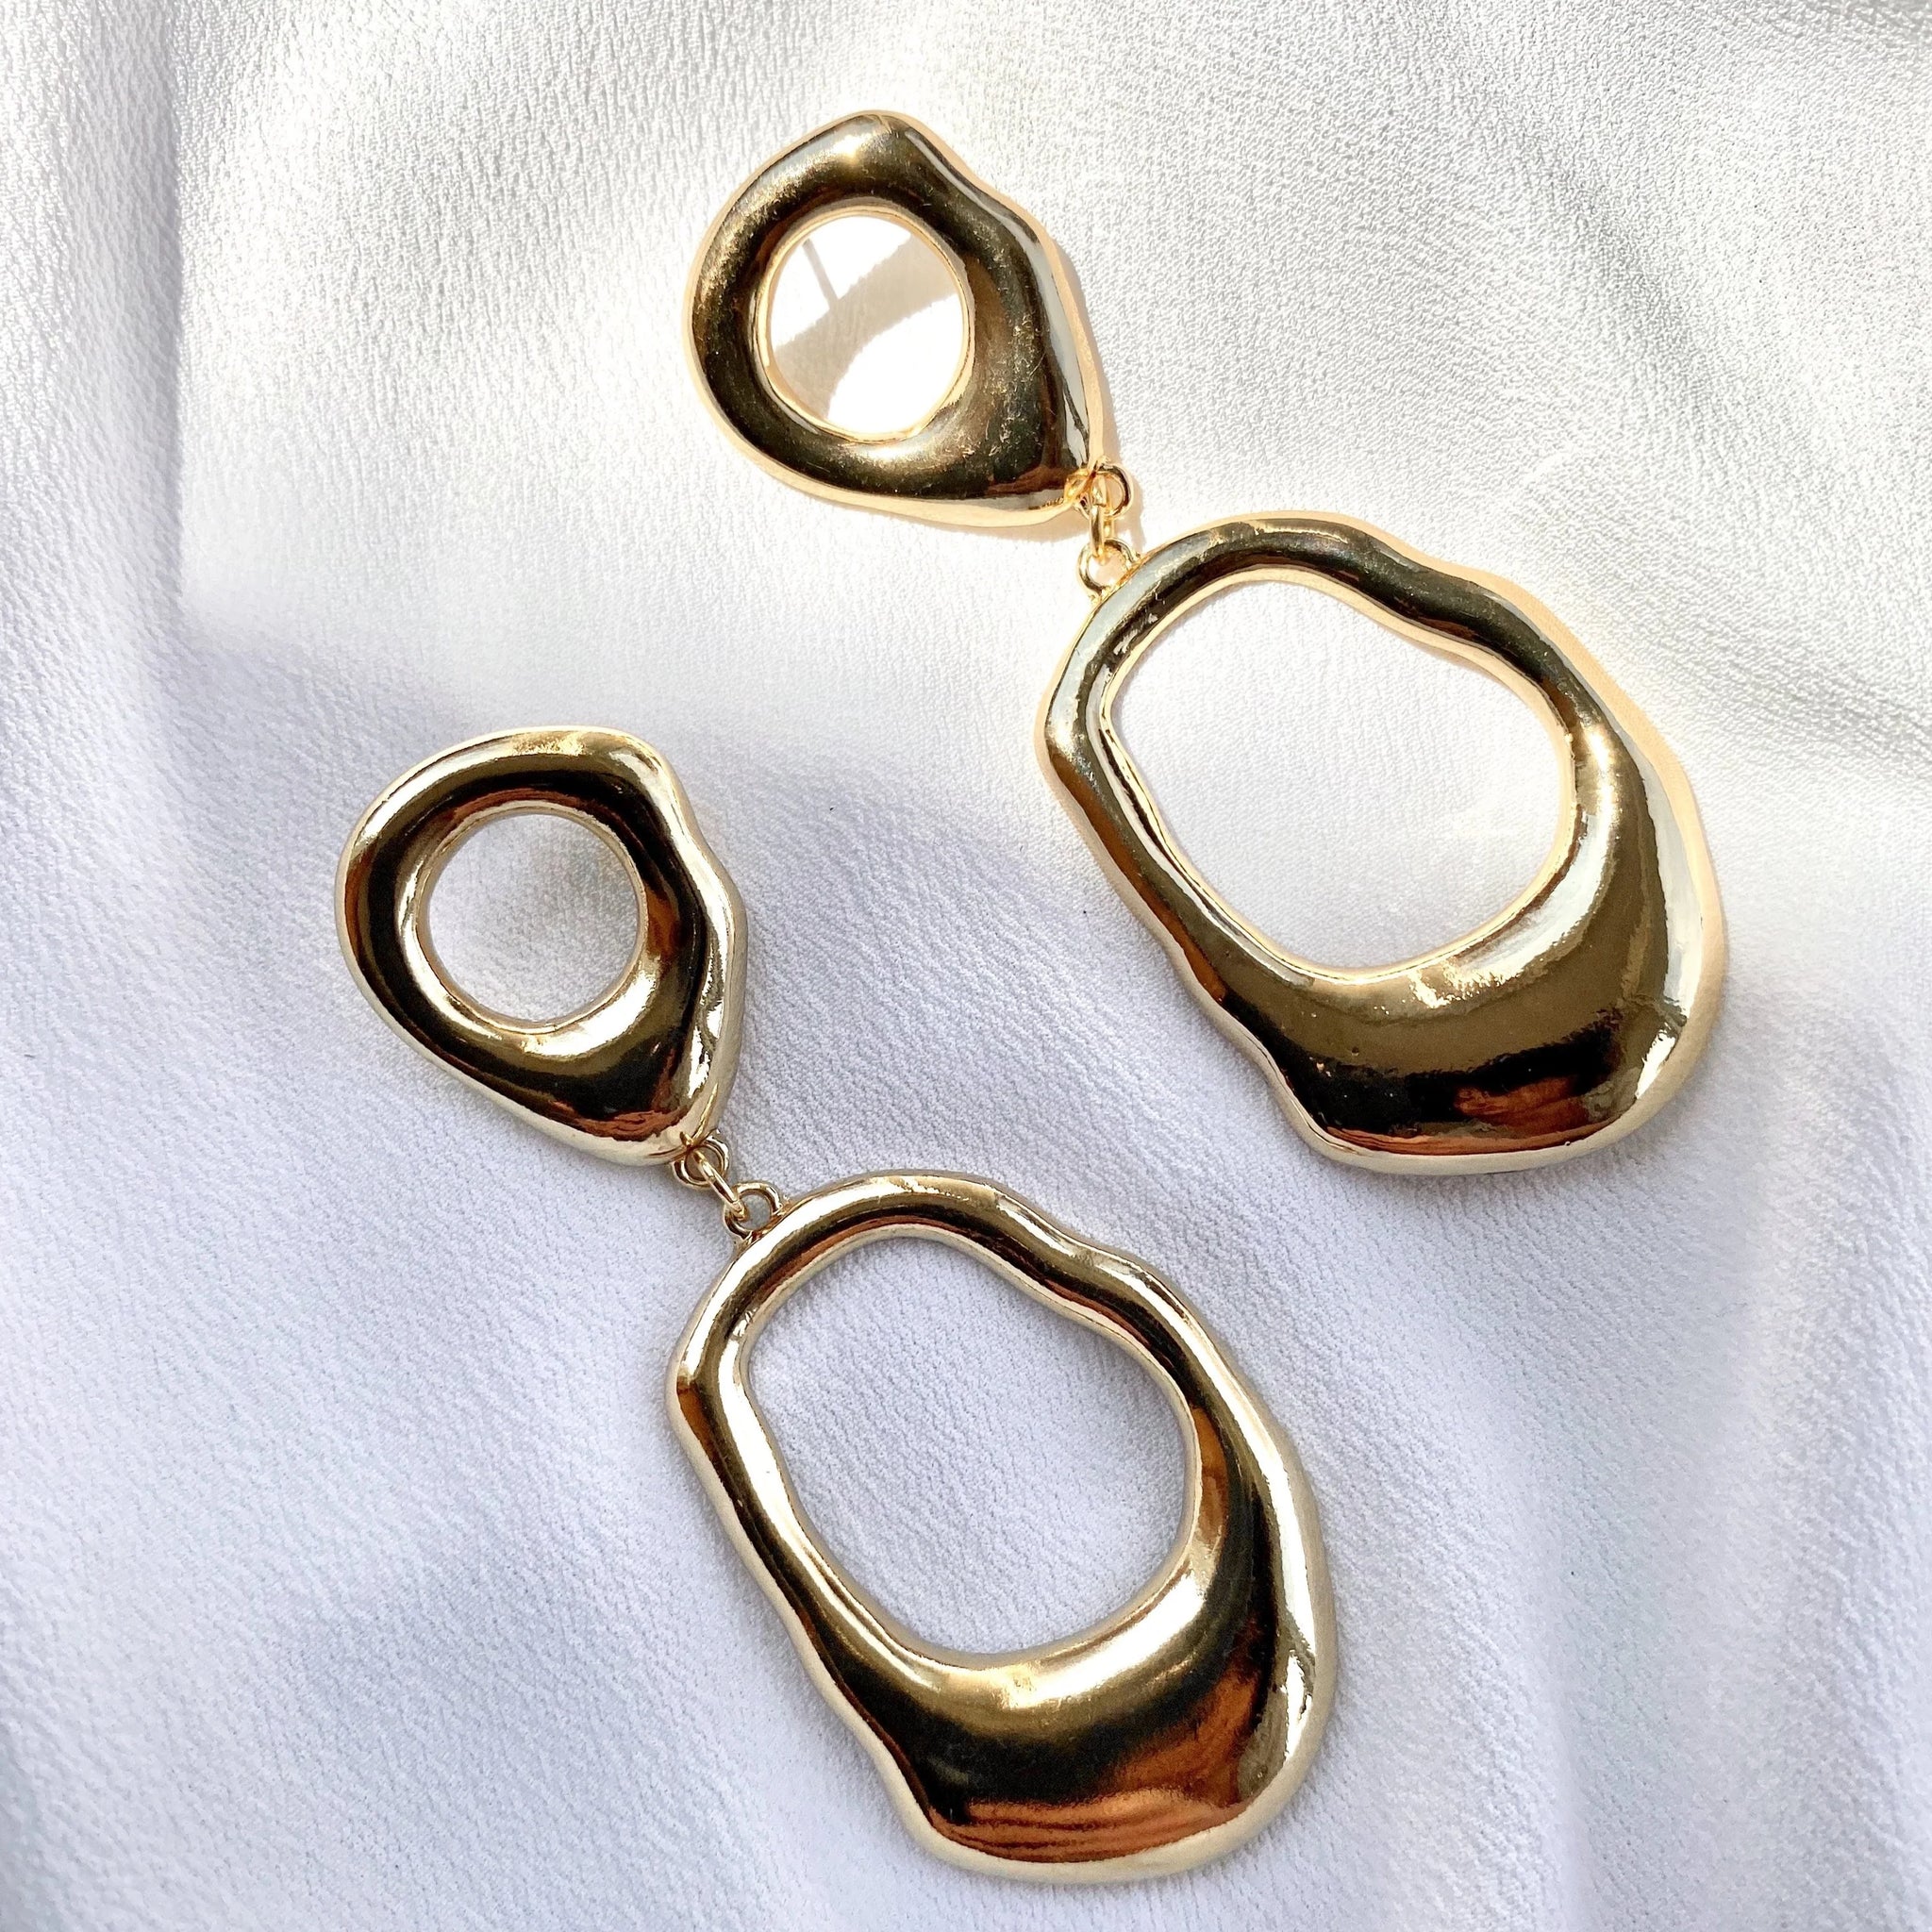 Bianca Statement Gold earrings - Rental